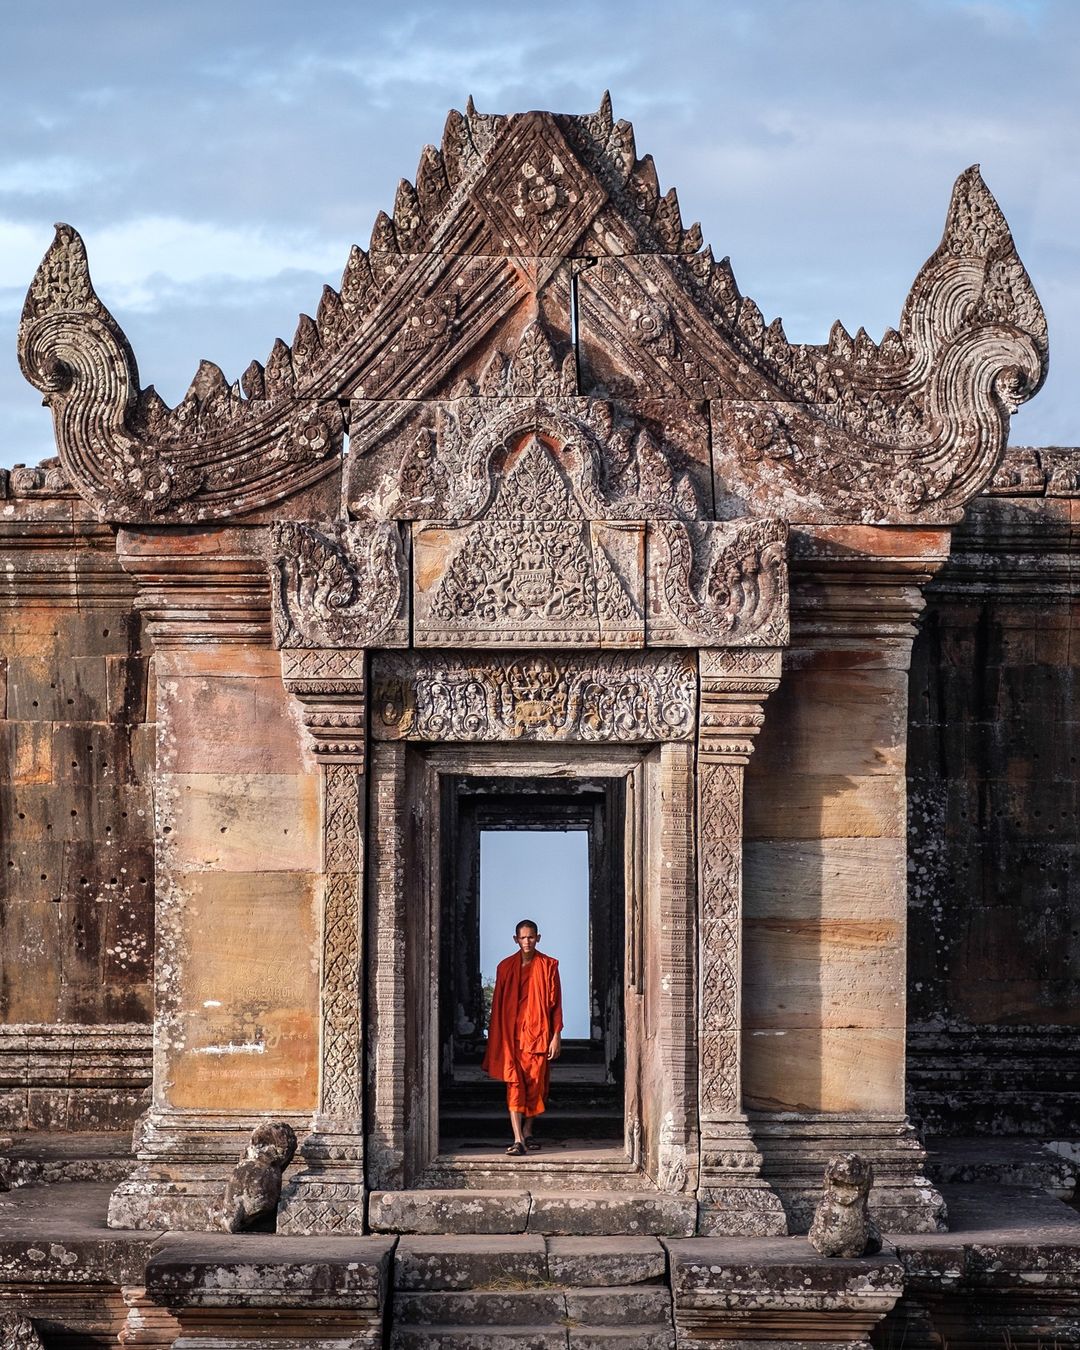 Preah Vihea Temple